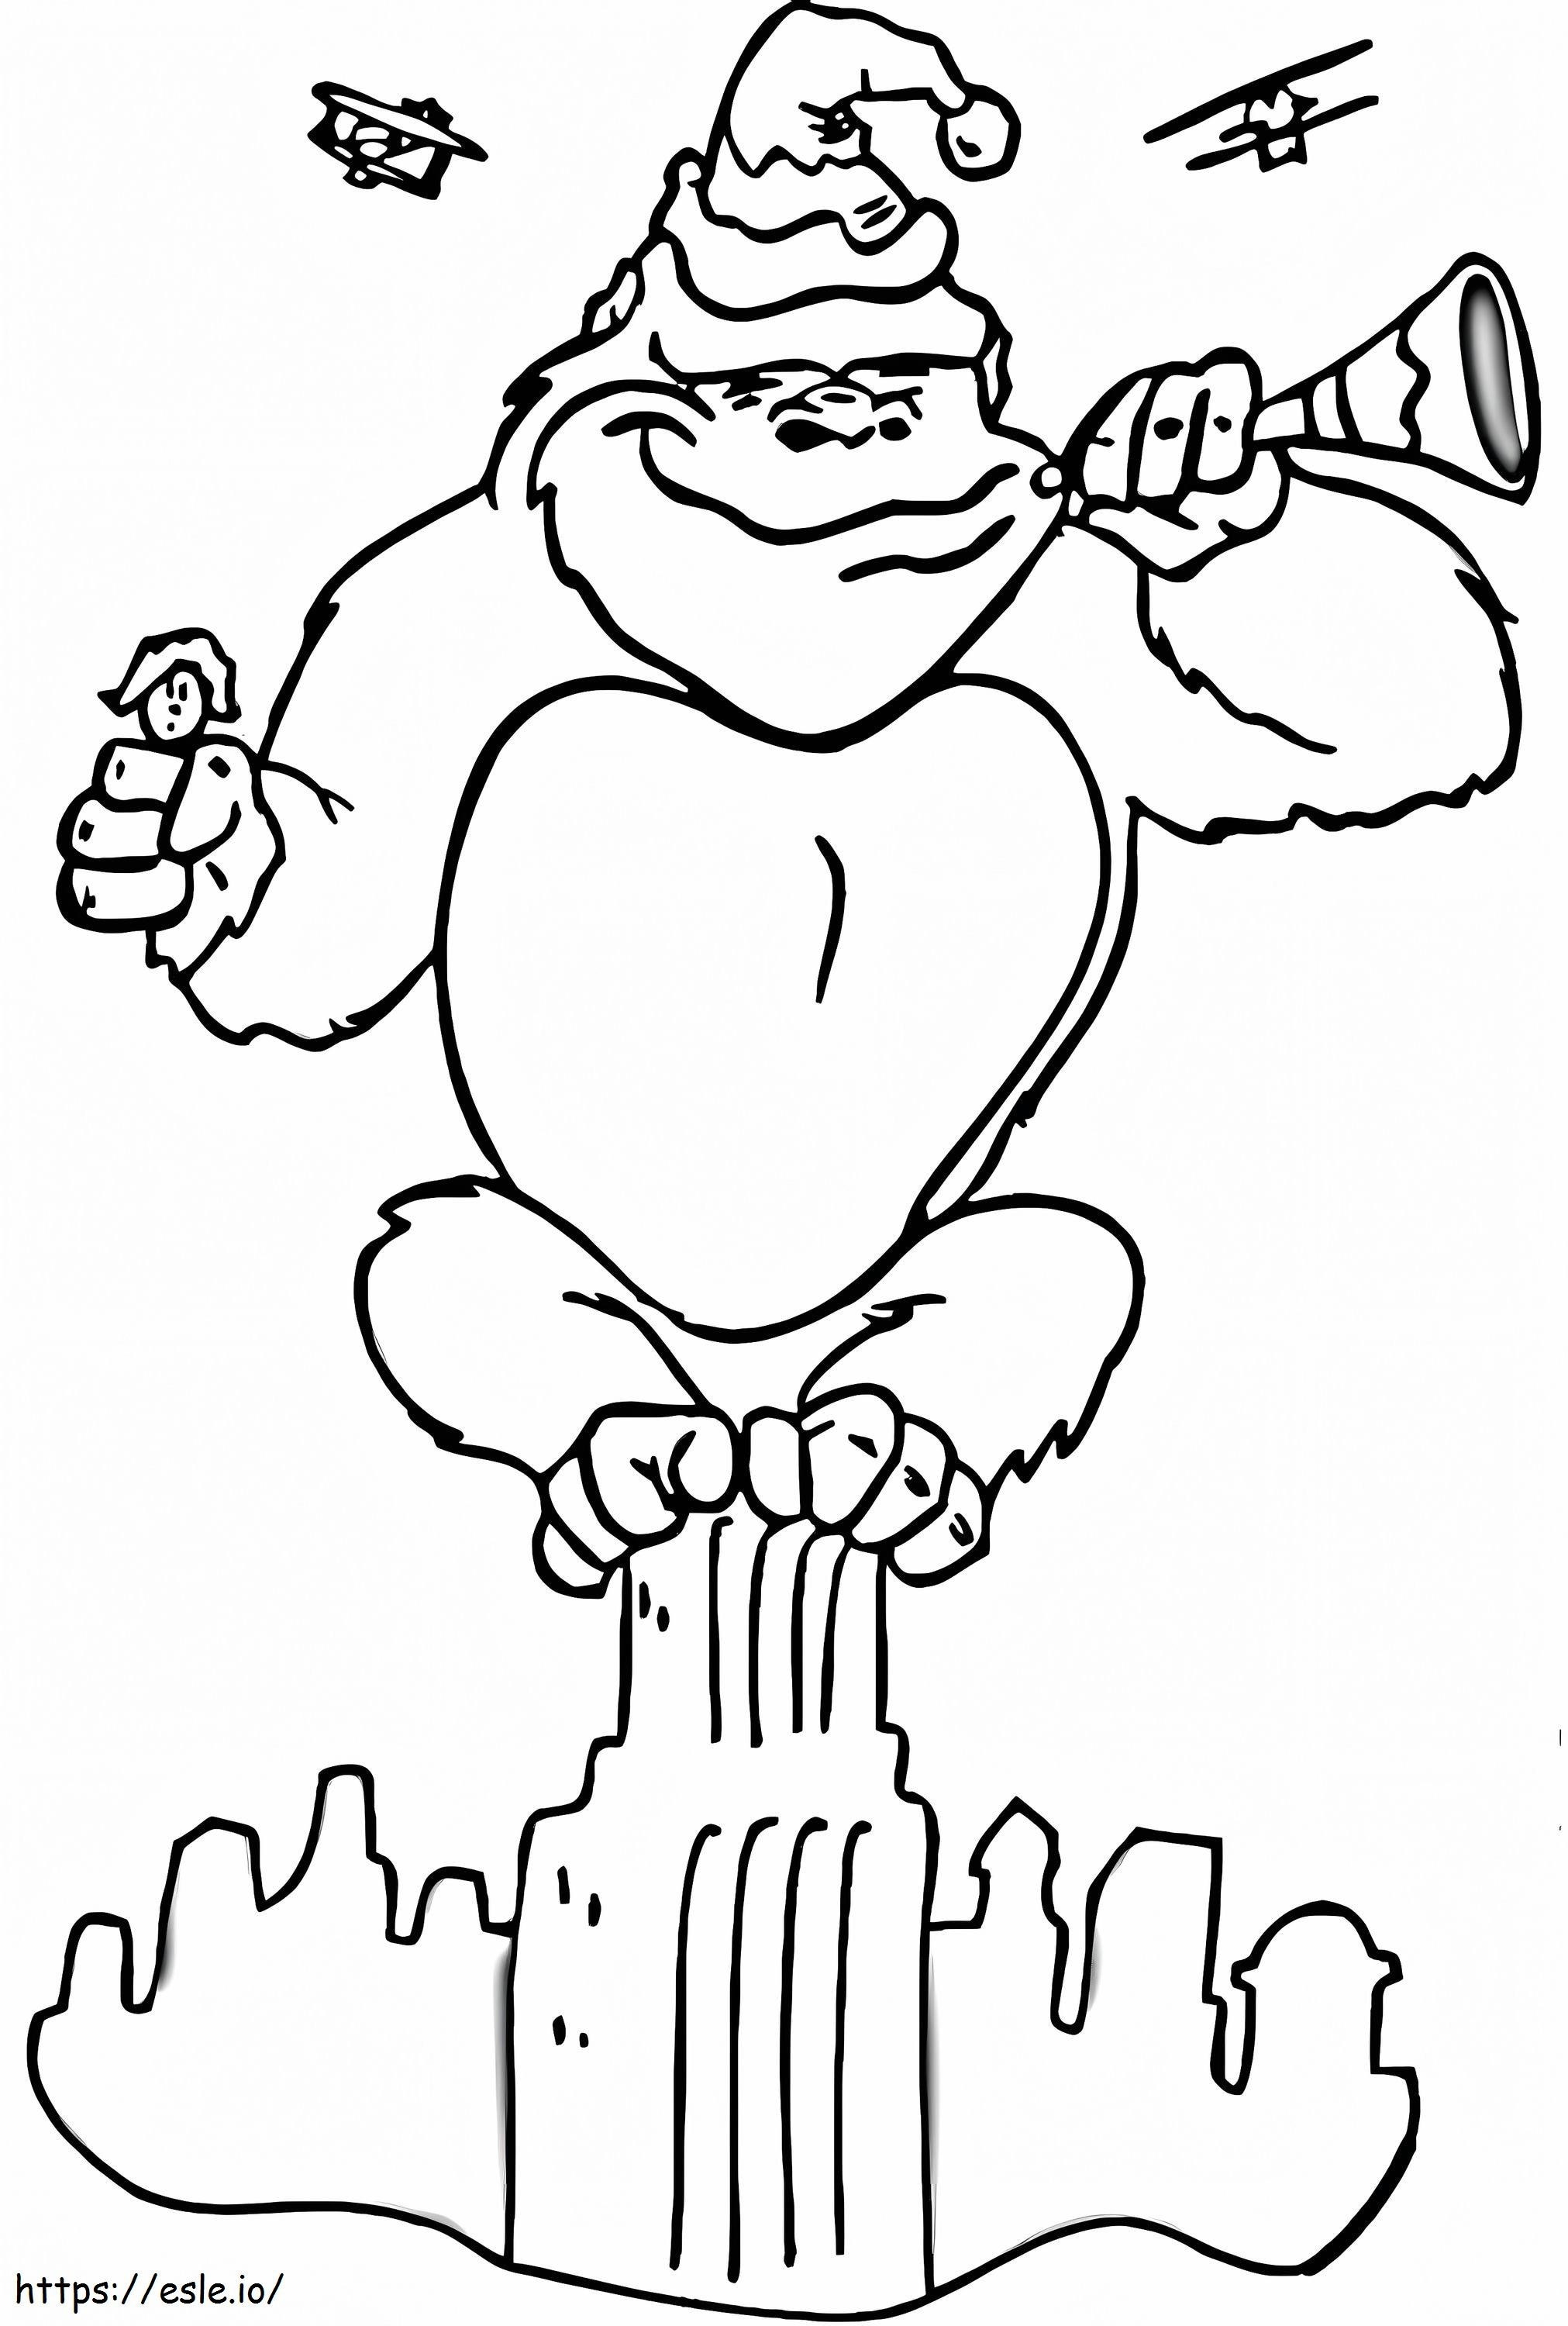 Funny King Kong coloring page